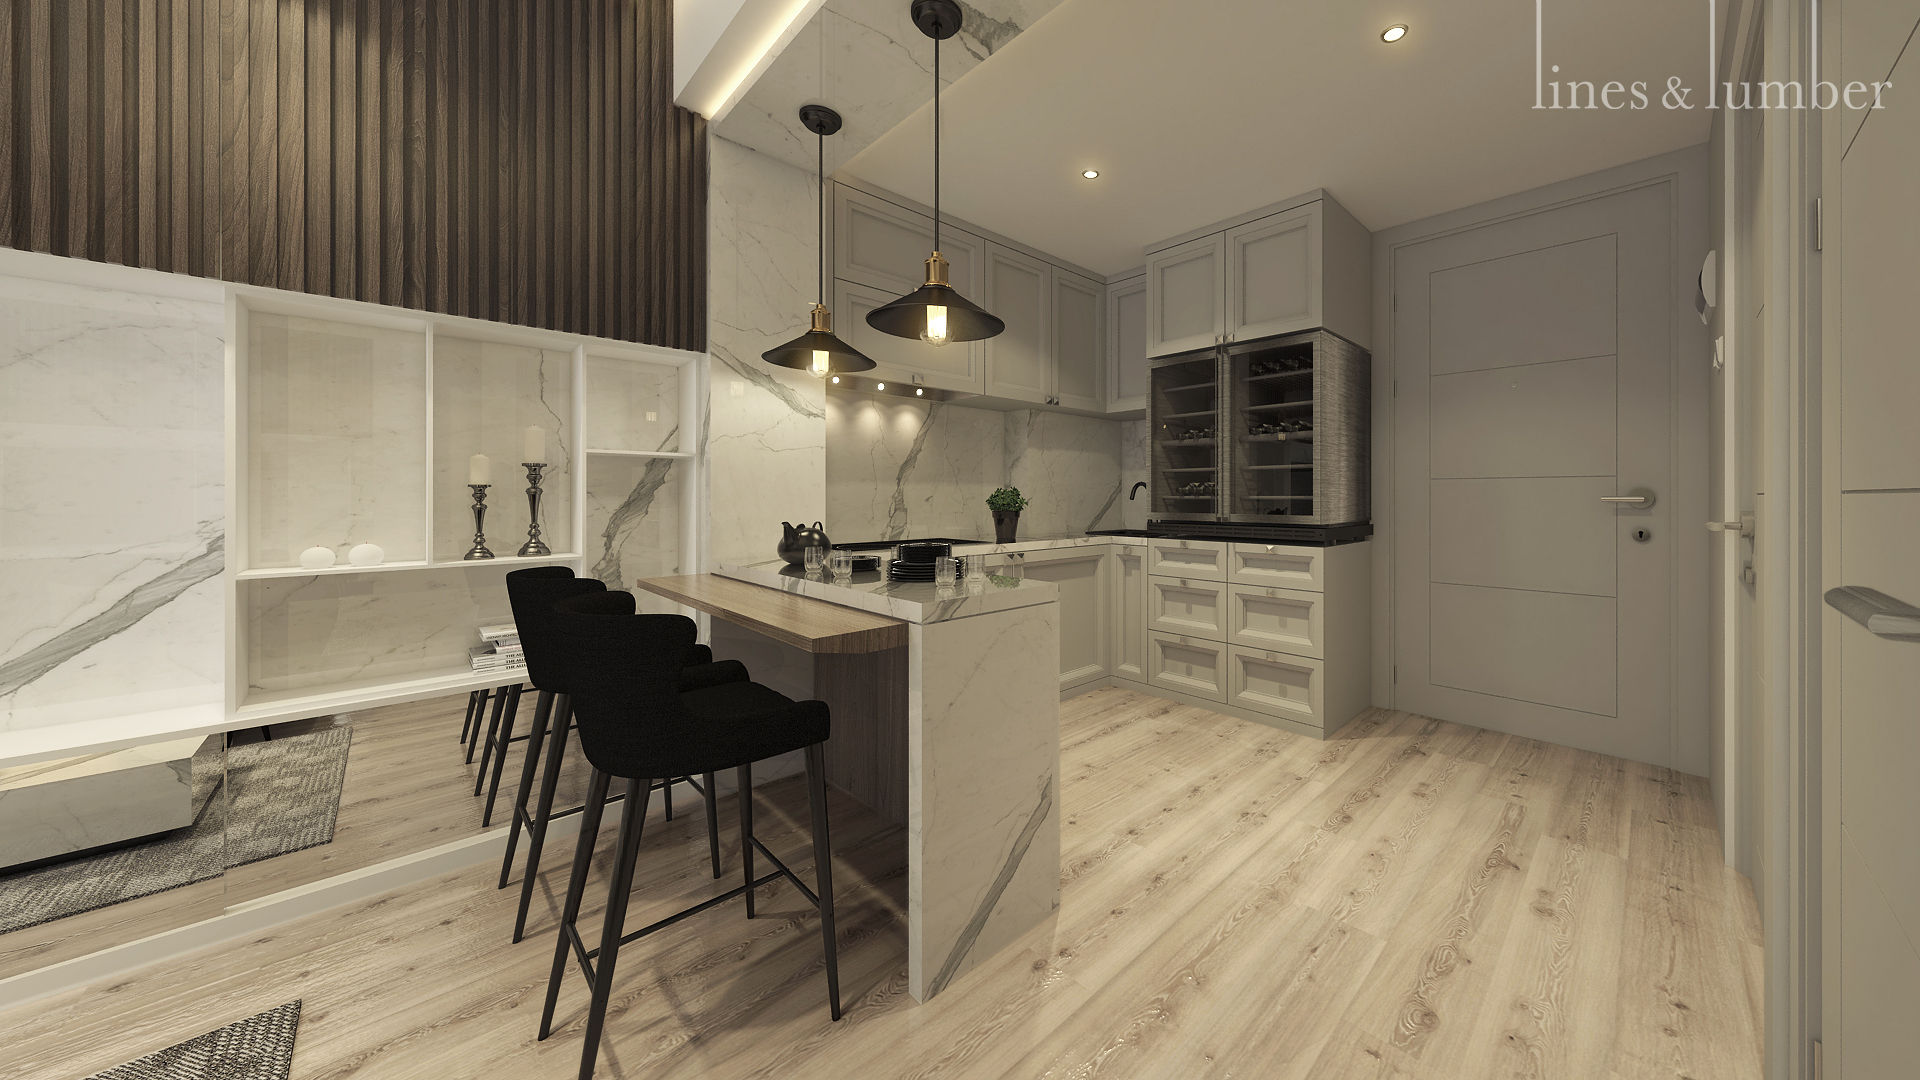 Studio Apartment, Sandalwood Springhill , Lines & Lumber Lines & Lumber Rustic style kitchen